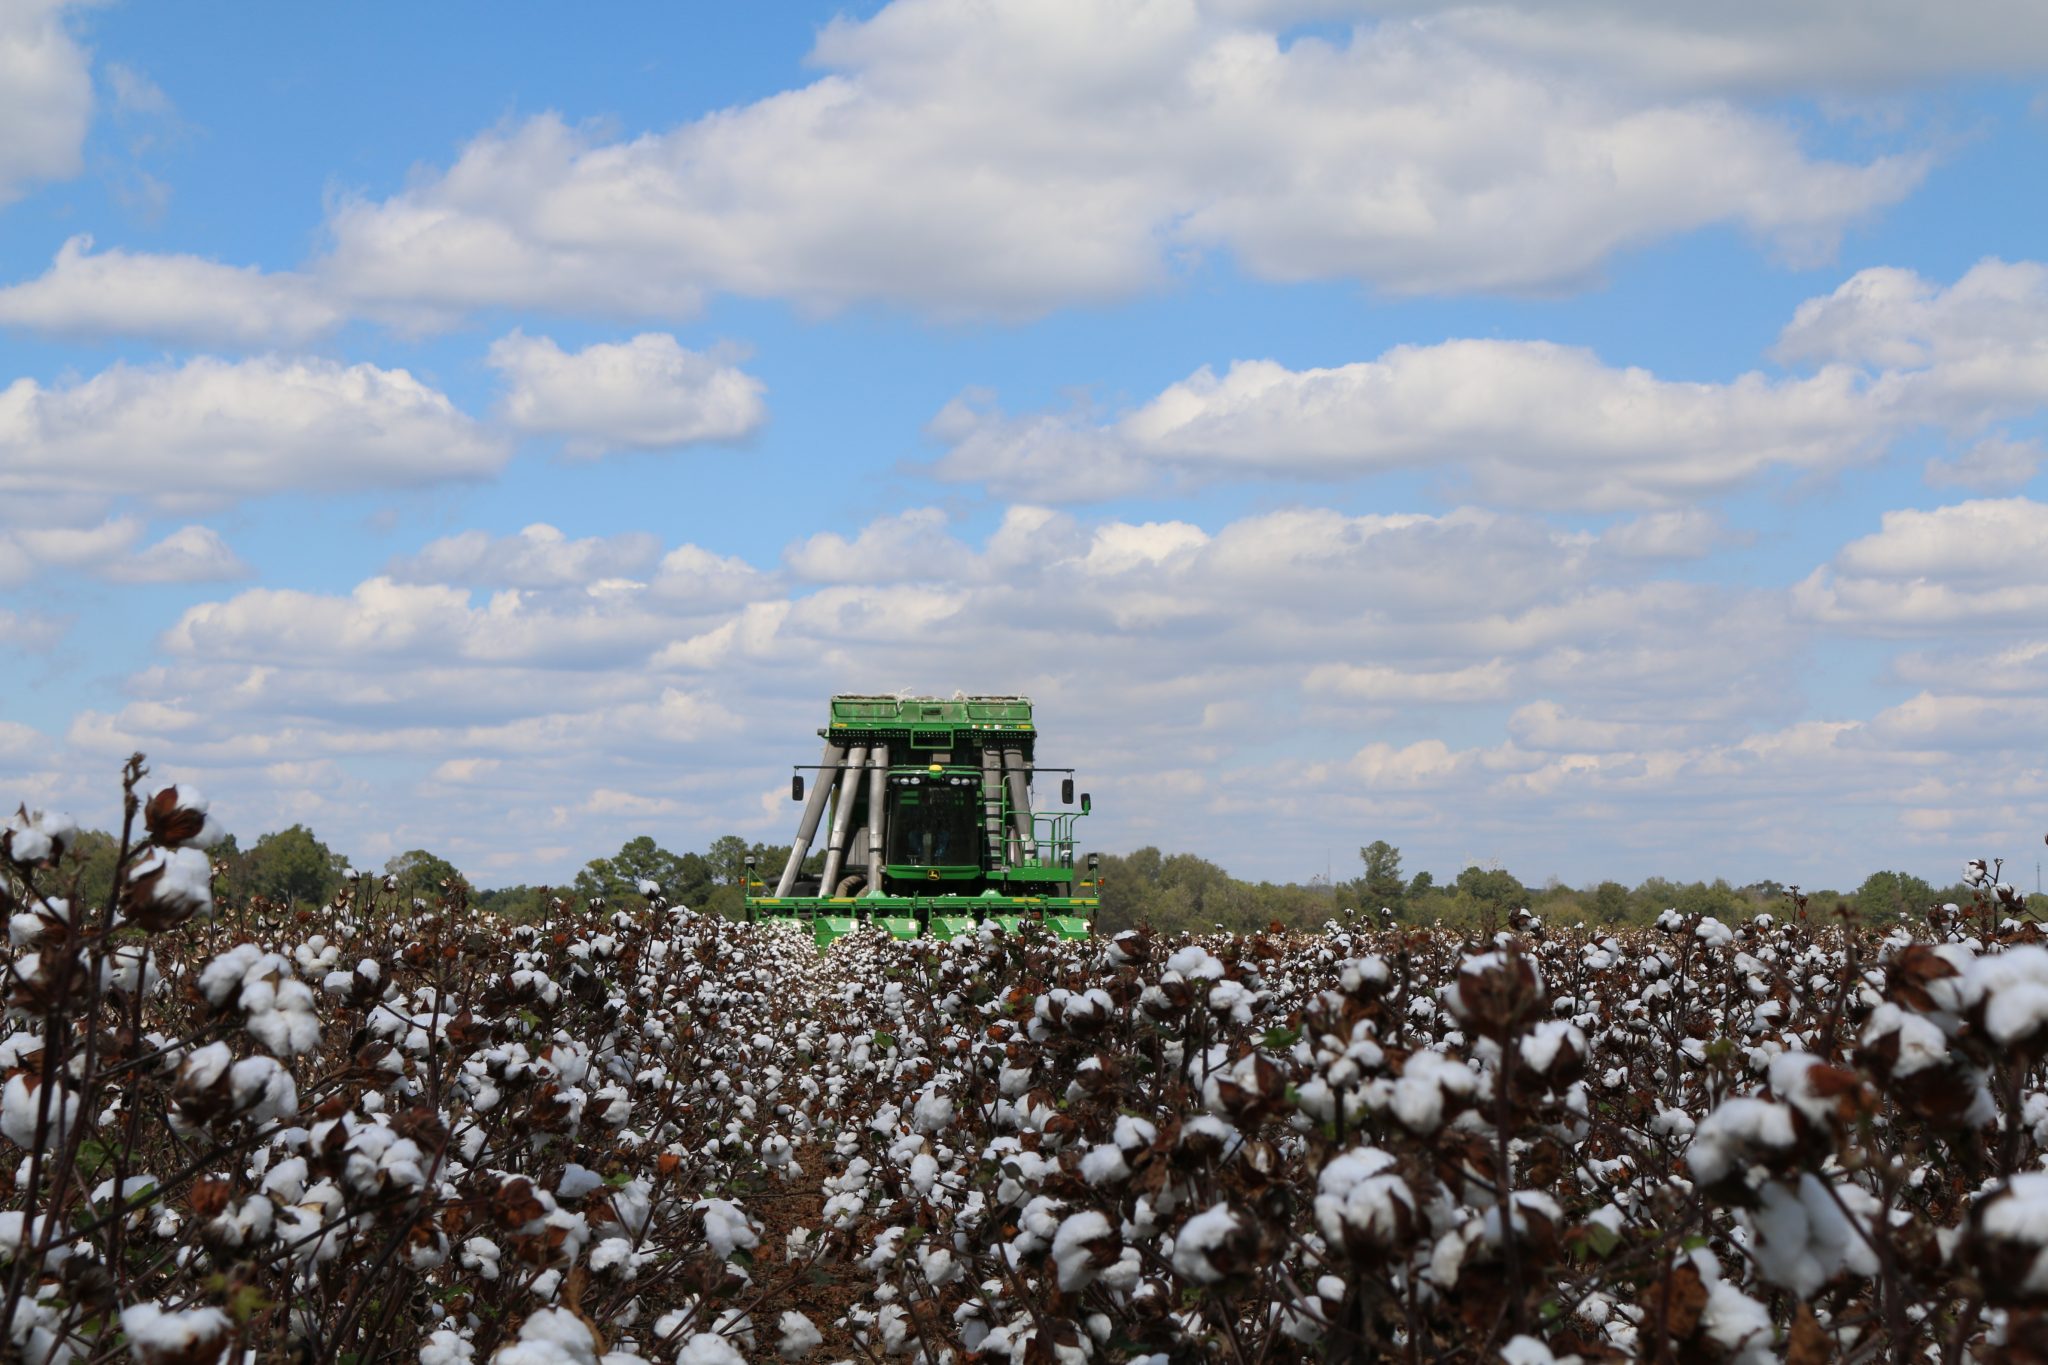 Practice harvest safety when harvesting cotton.